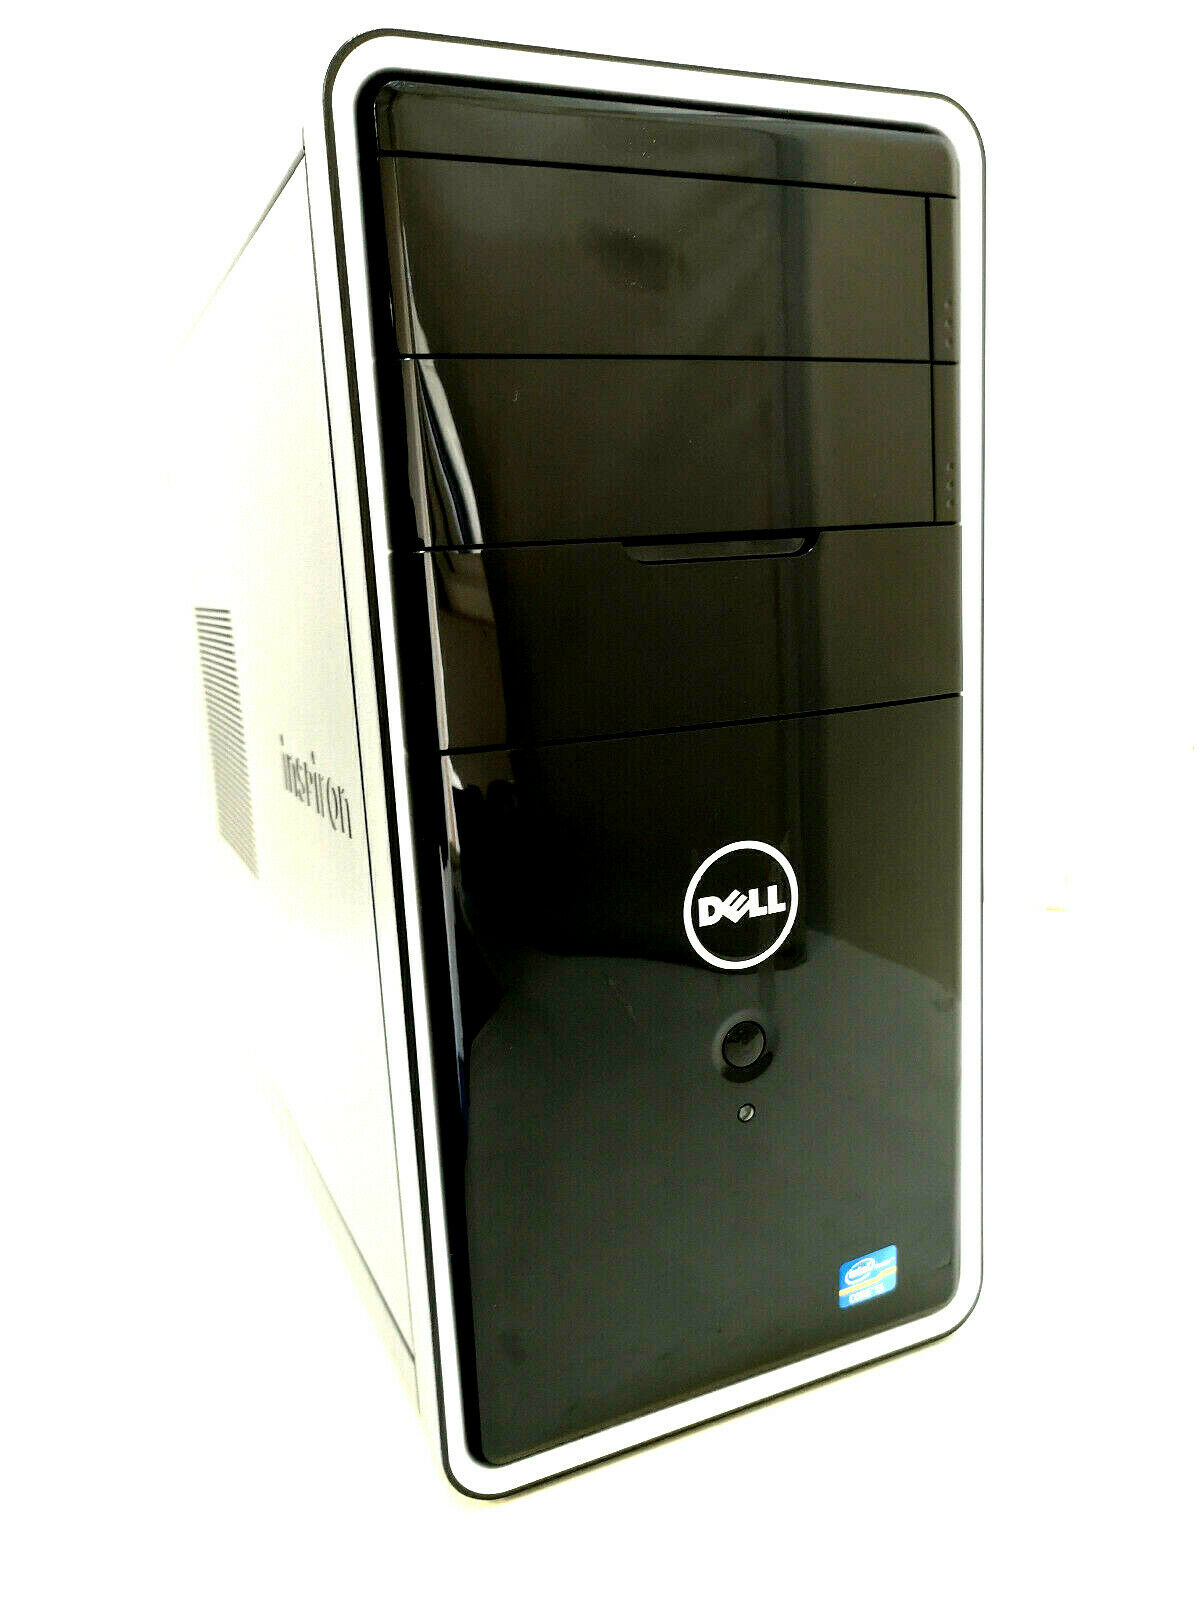 Refurbished Dell Inspiron 660 Desktop Tower PC